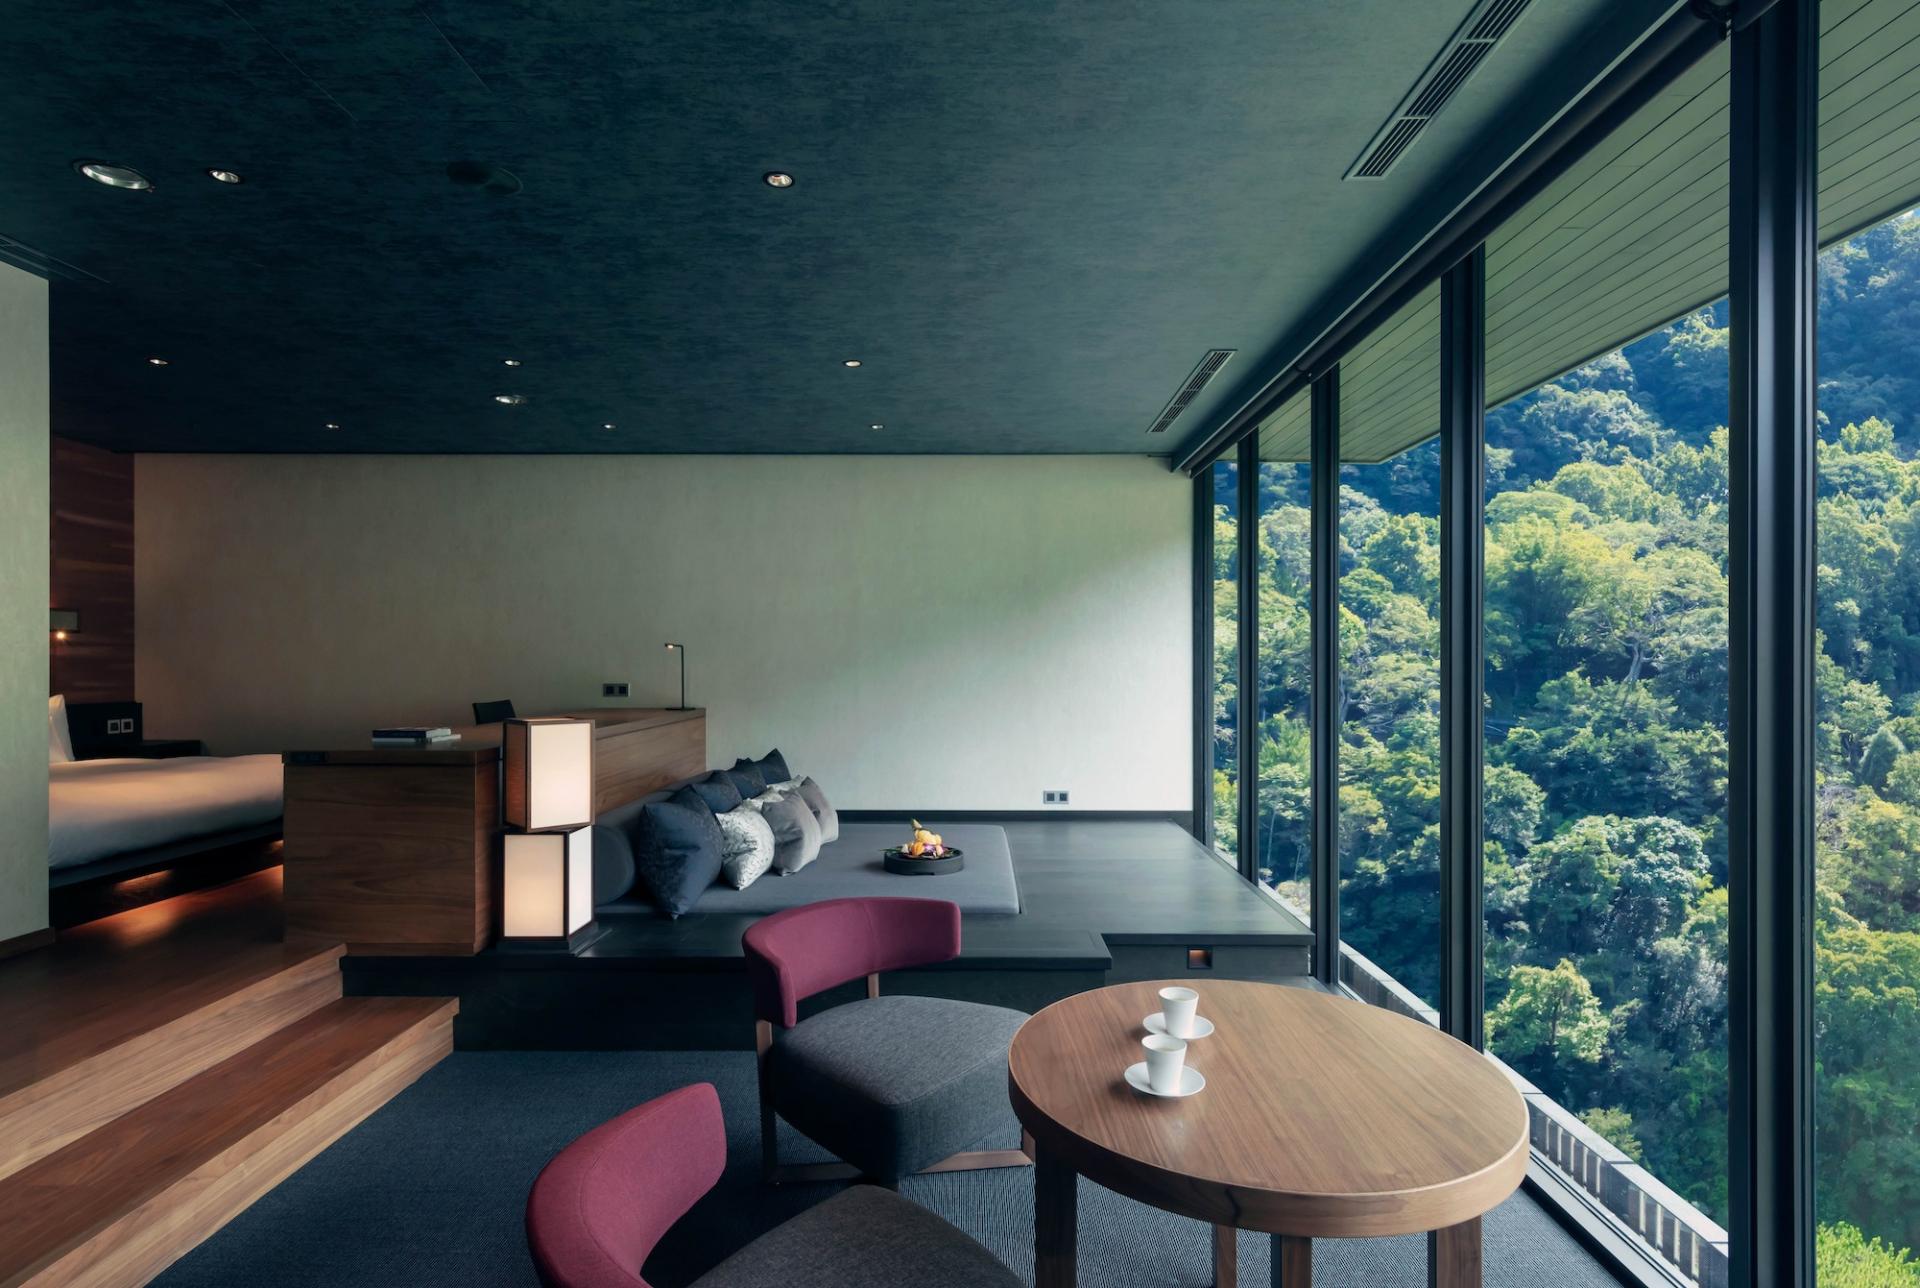 Our Top 10 Hotels by Design: Hoshinoya Guguan 